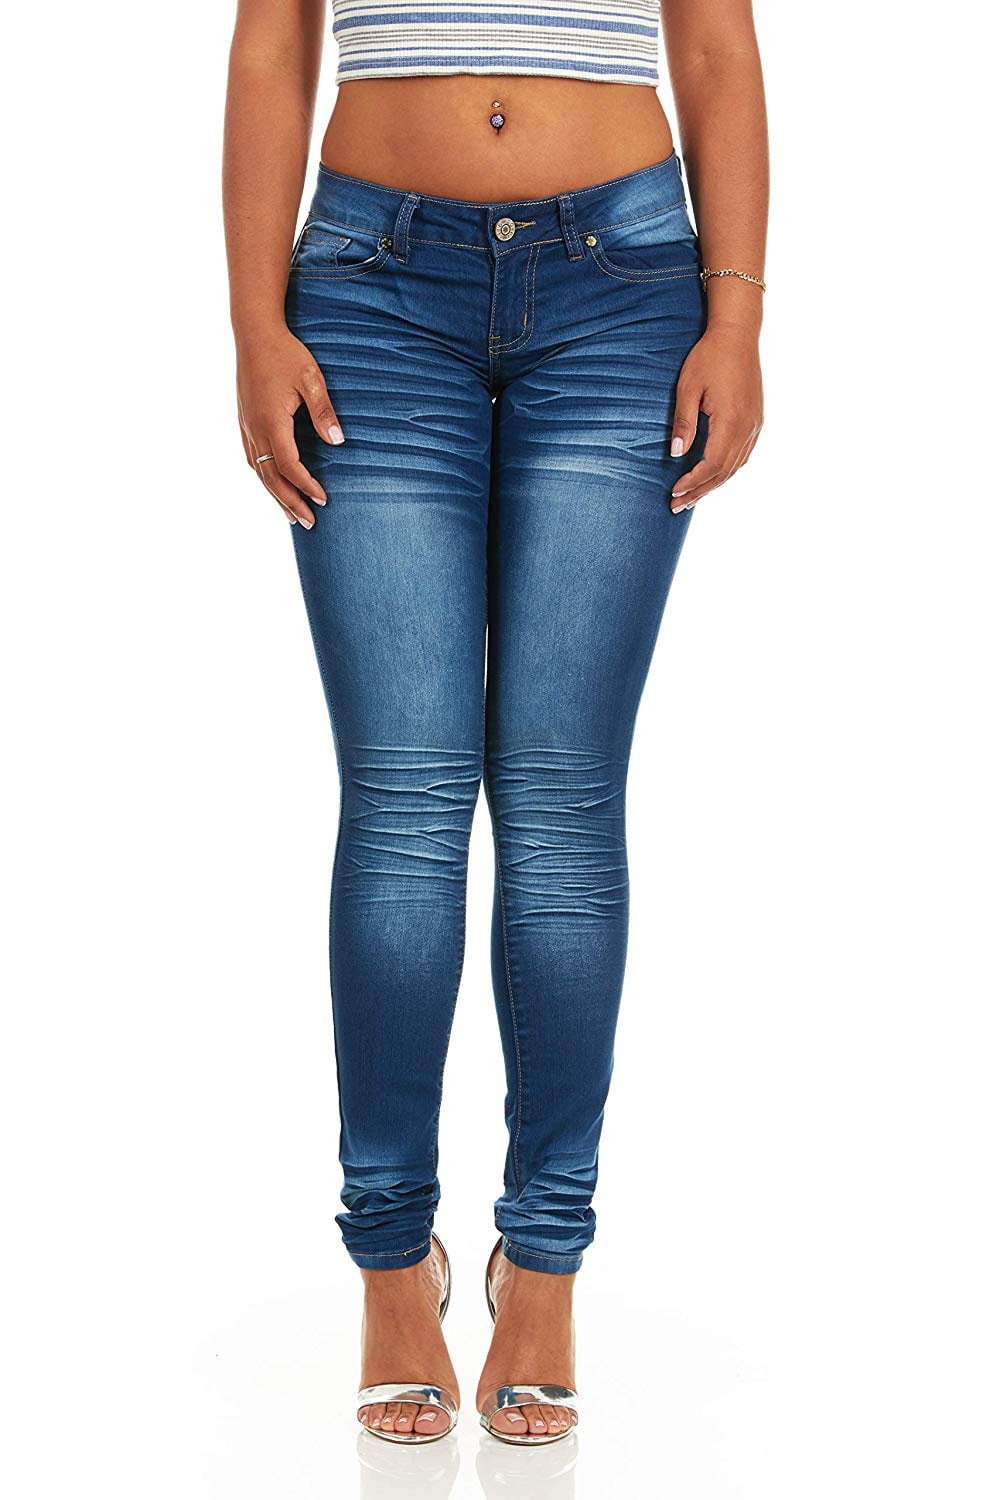 size 3 jeans